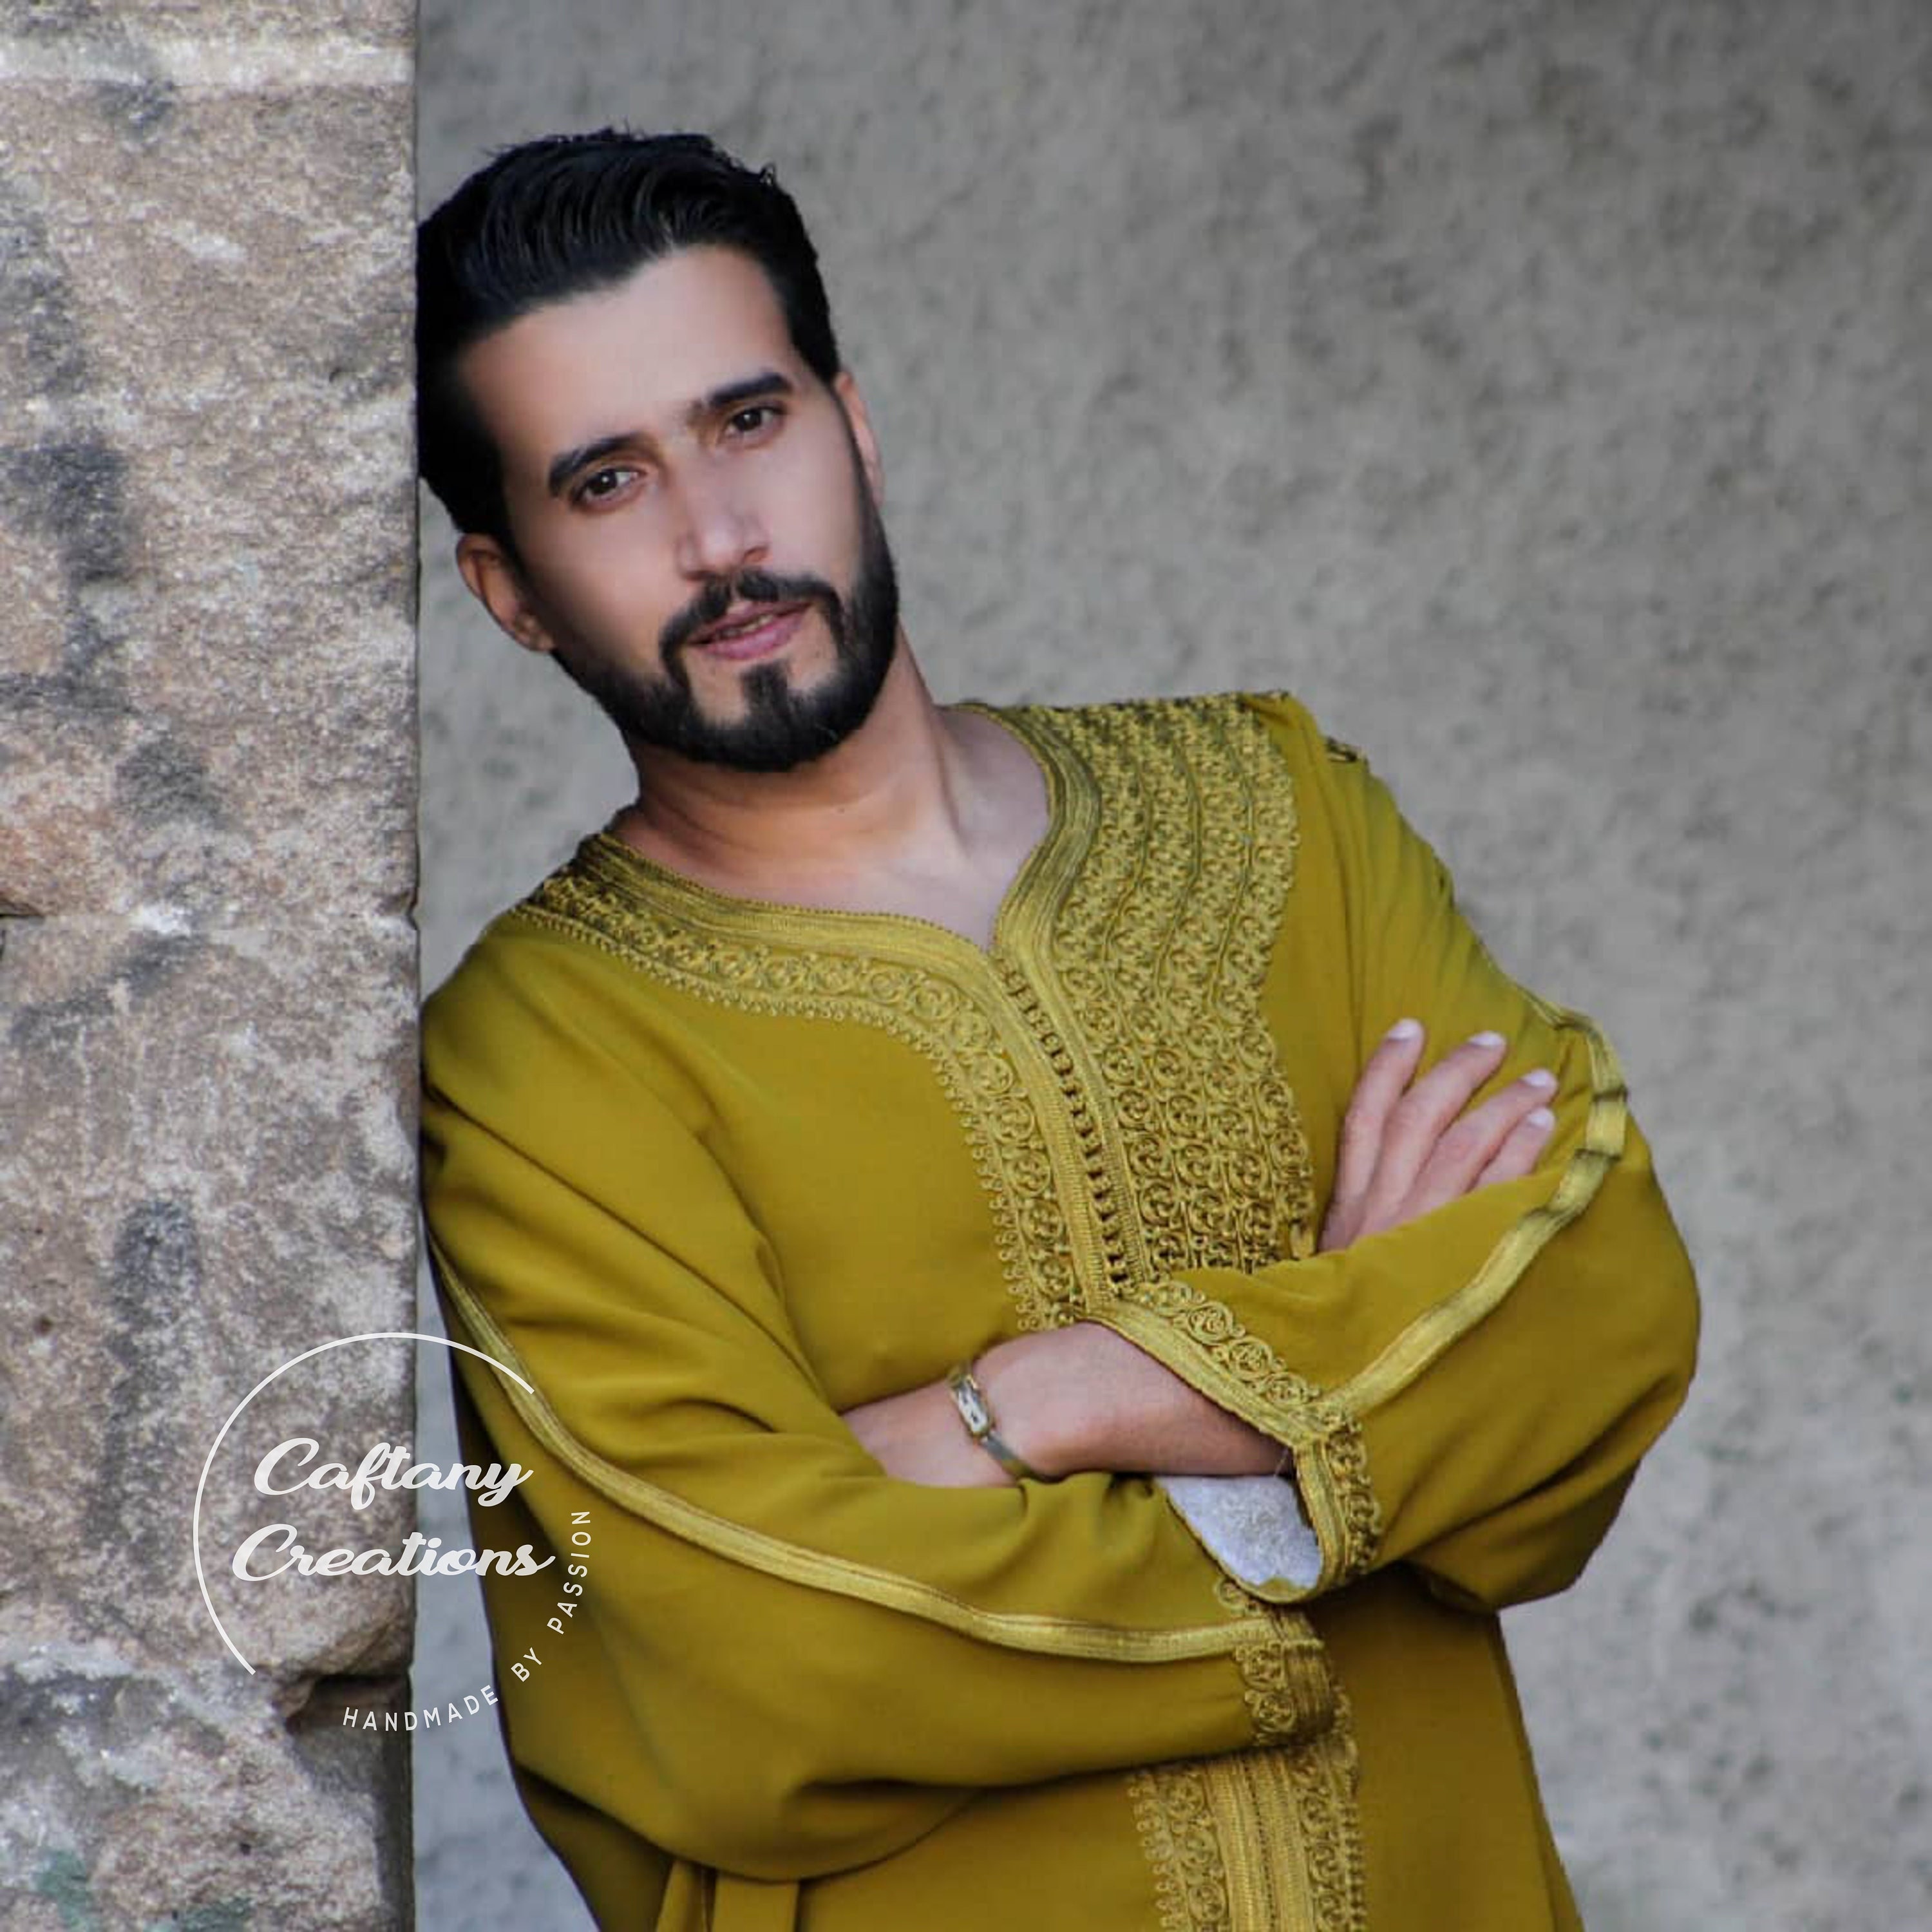 Gandoura For Men,Moroccan Gandura,Traditional Tunic,Handmade Moroccan Caftan,Arabic Dress,Pyjama Robe For Men,Wedding Dress